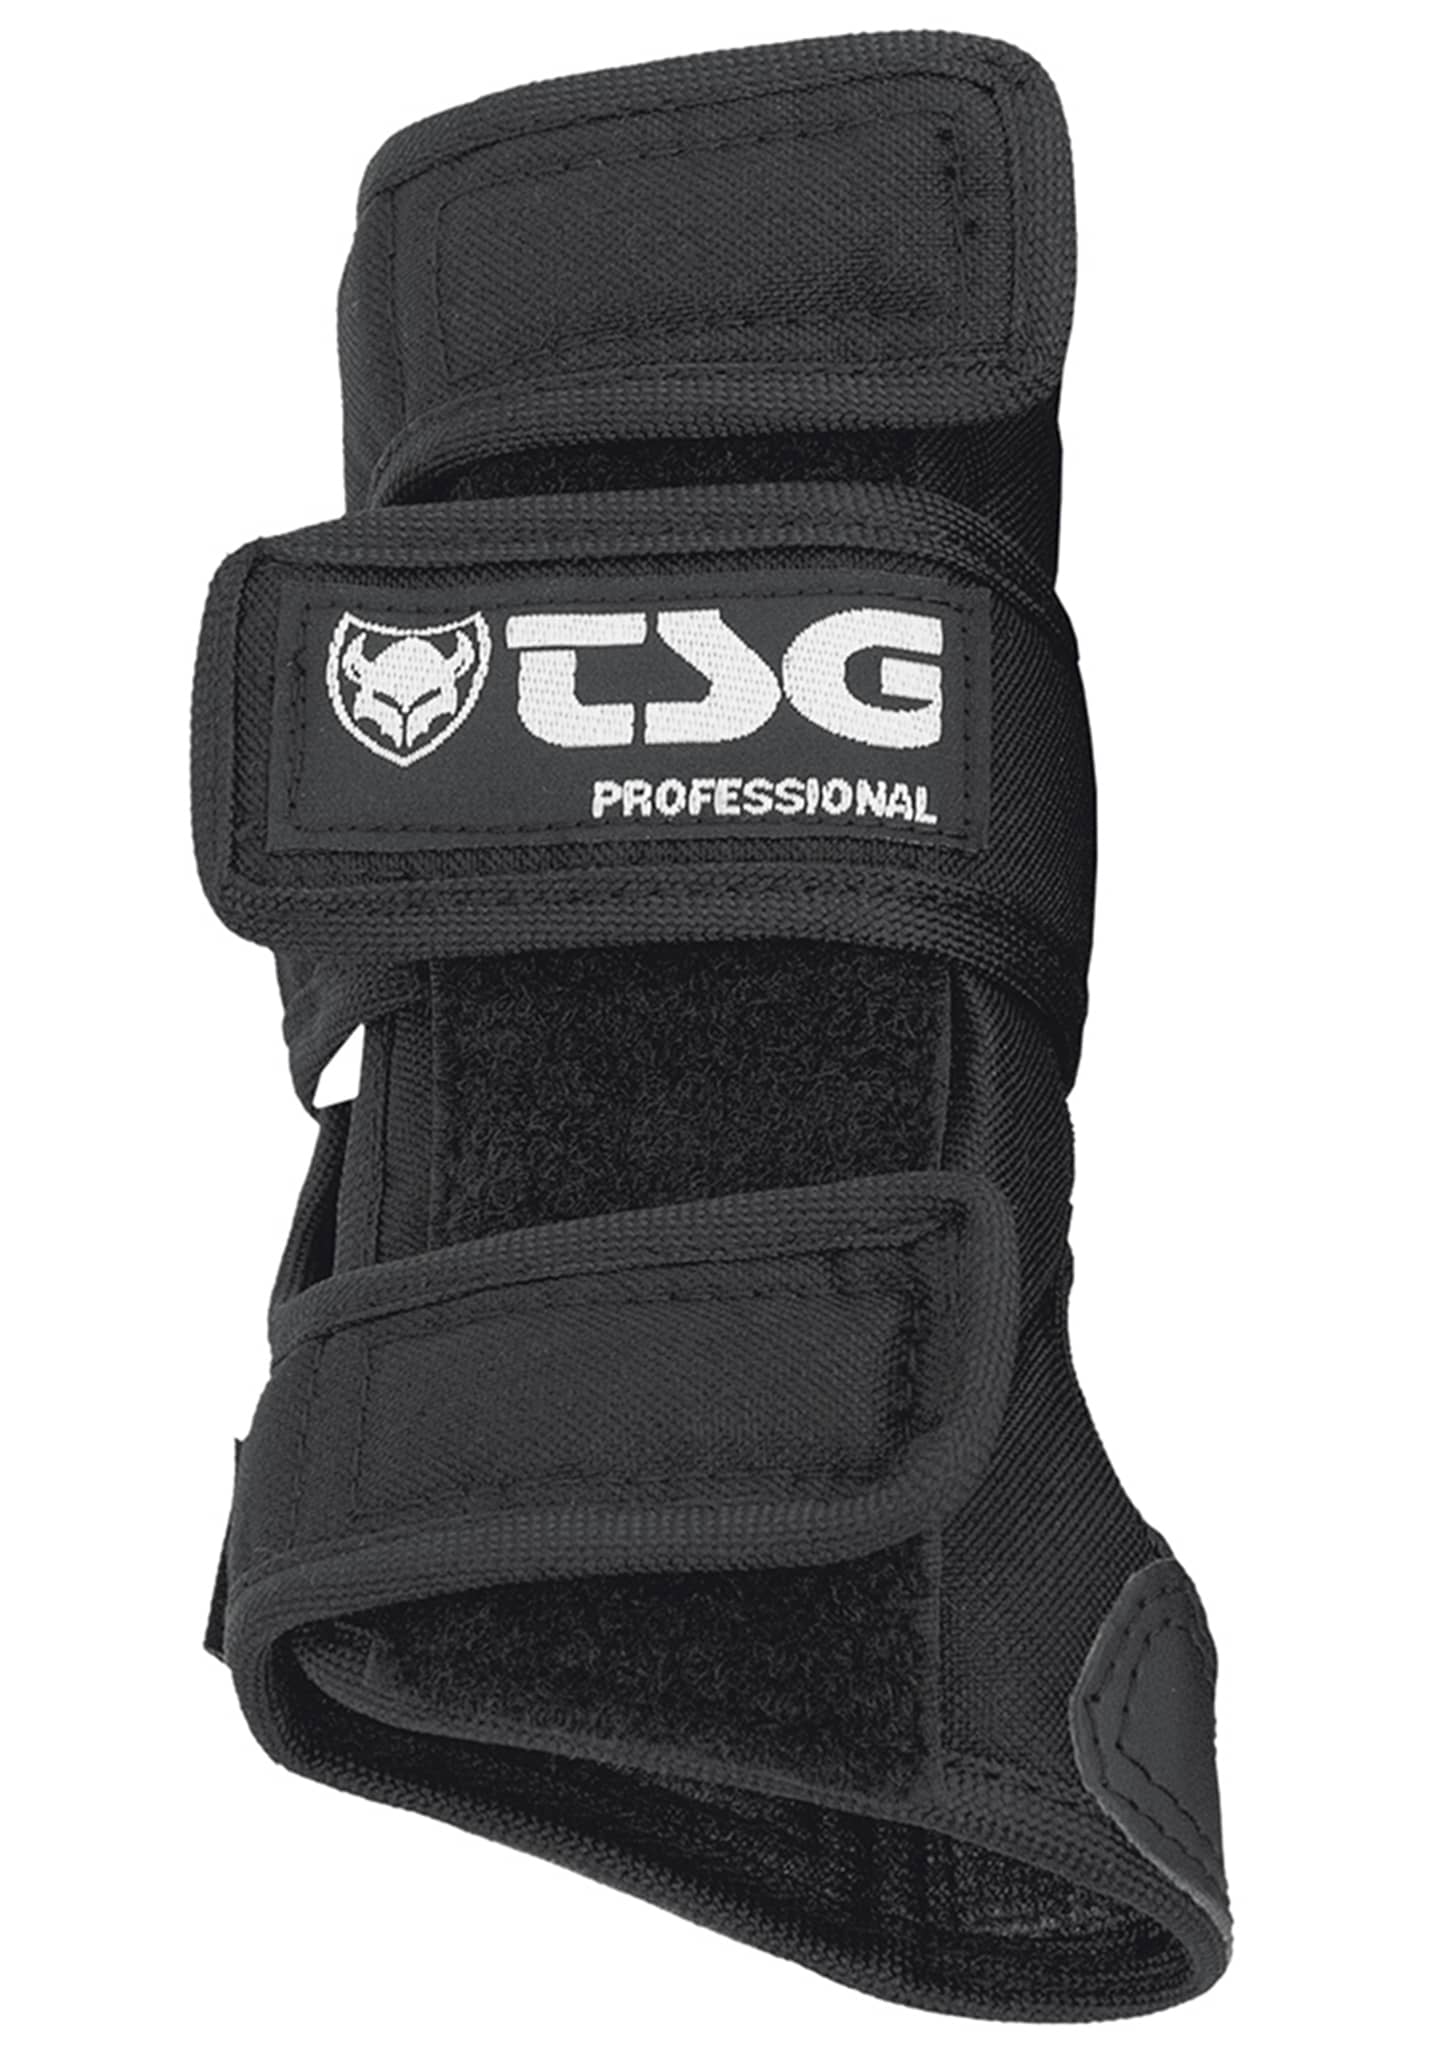 TSG Professional Snowboard Protektoren black S